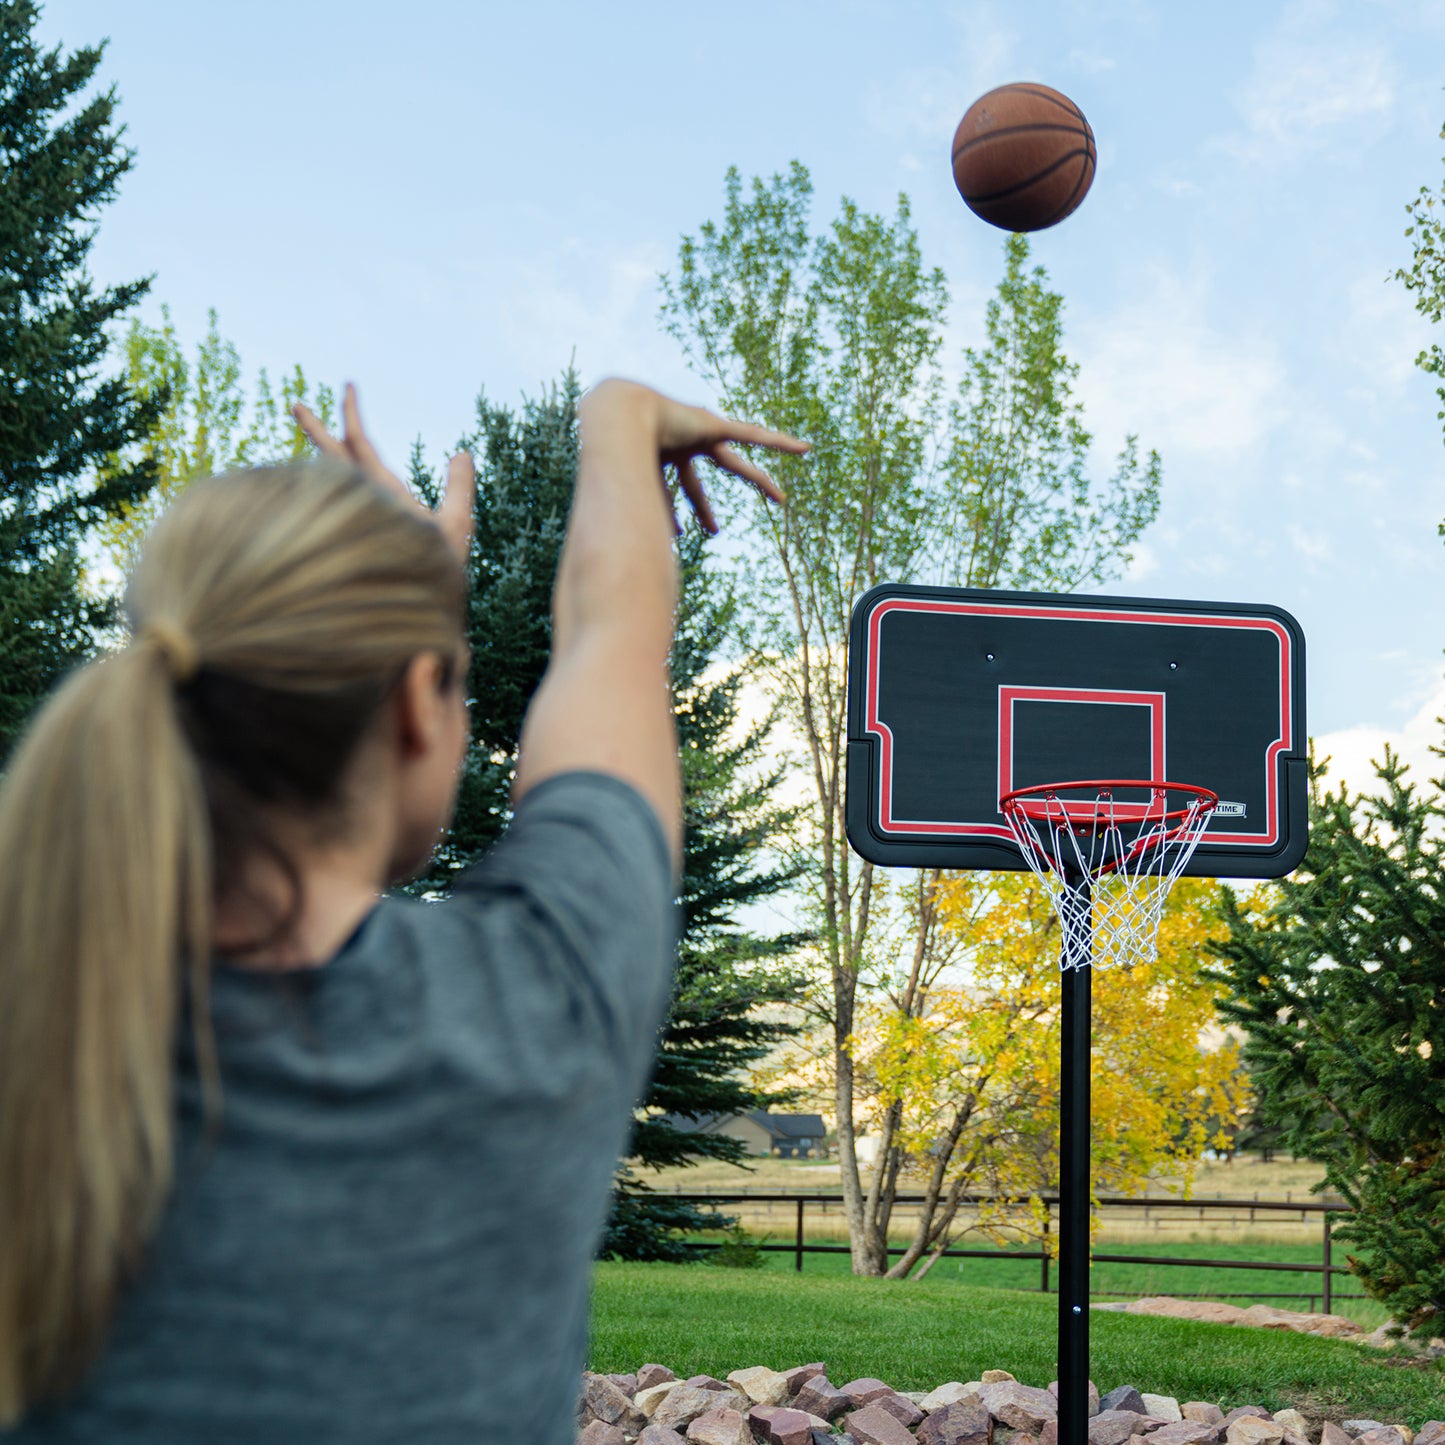 Lifetime Adjustable Portable Basketball Hoop (44-Inch Impact)